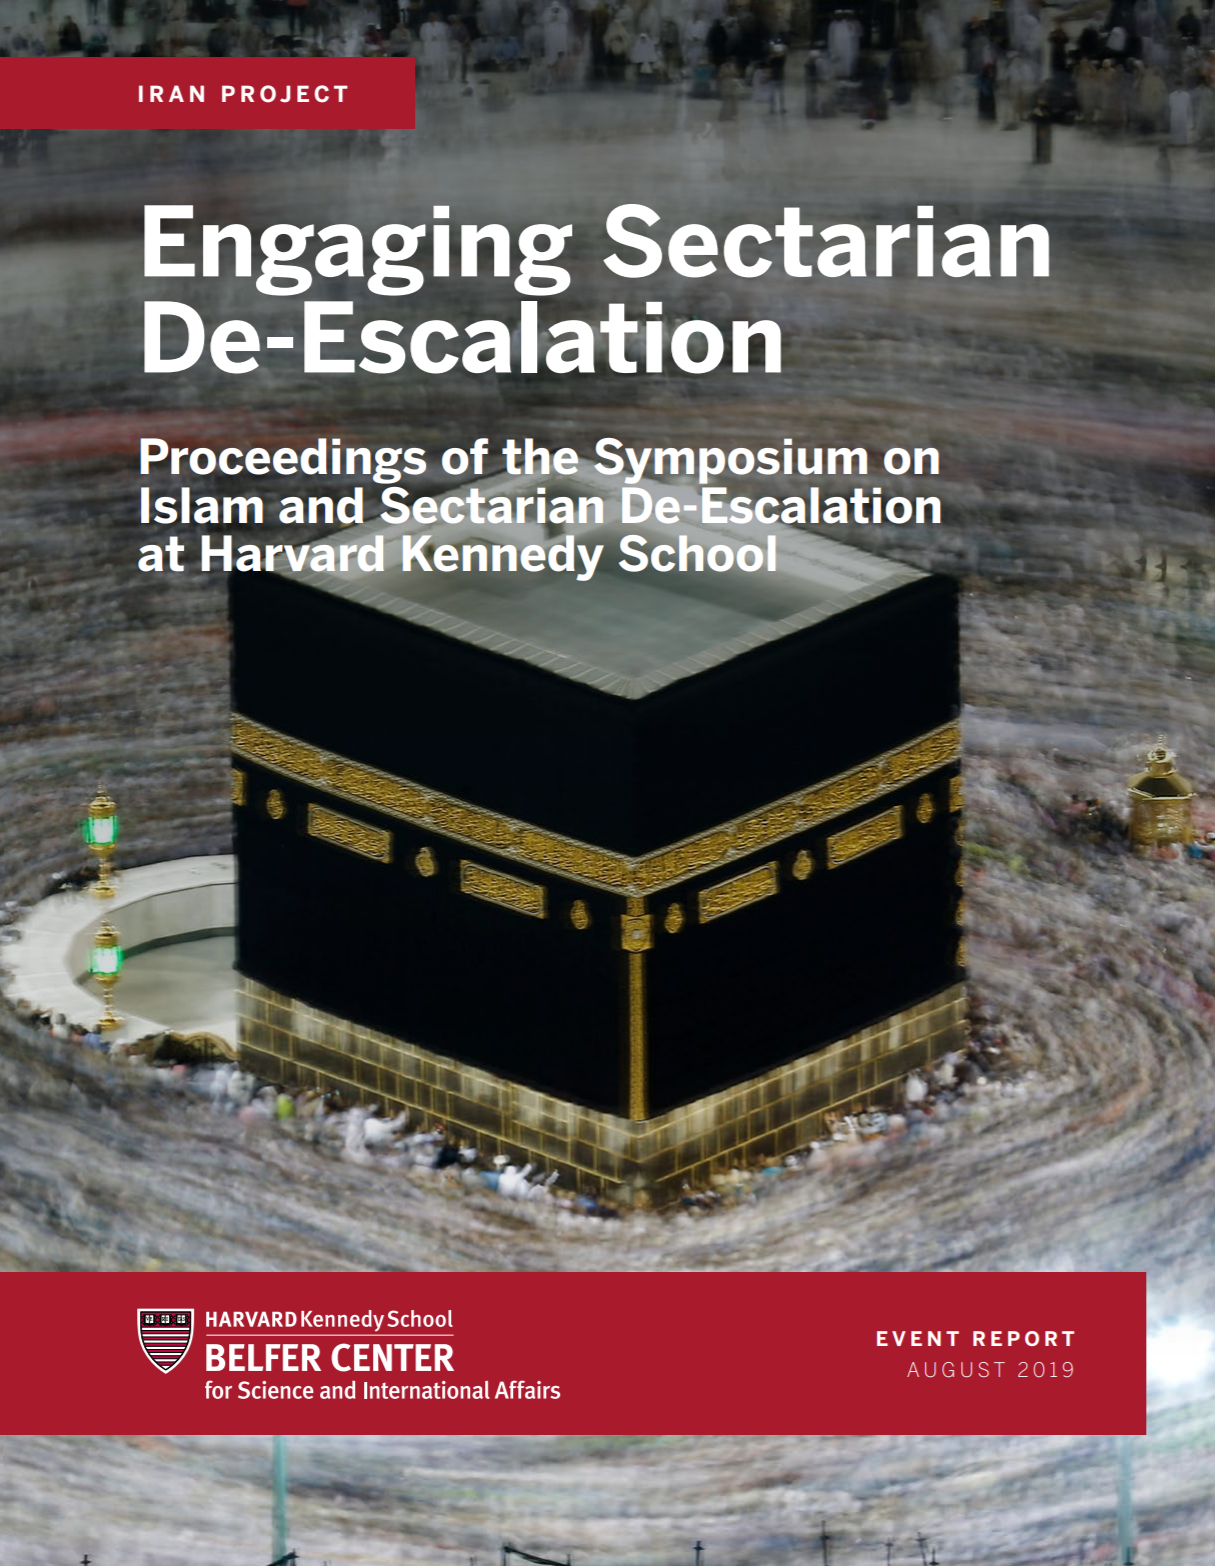 Five Myths of Sectarian De-Escalation